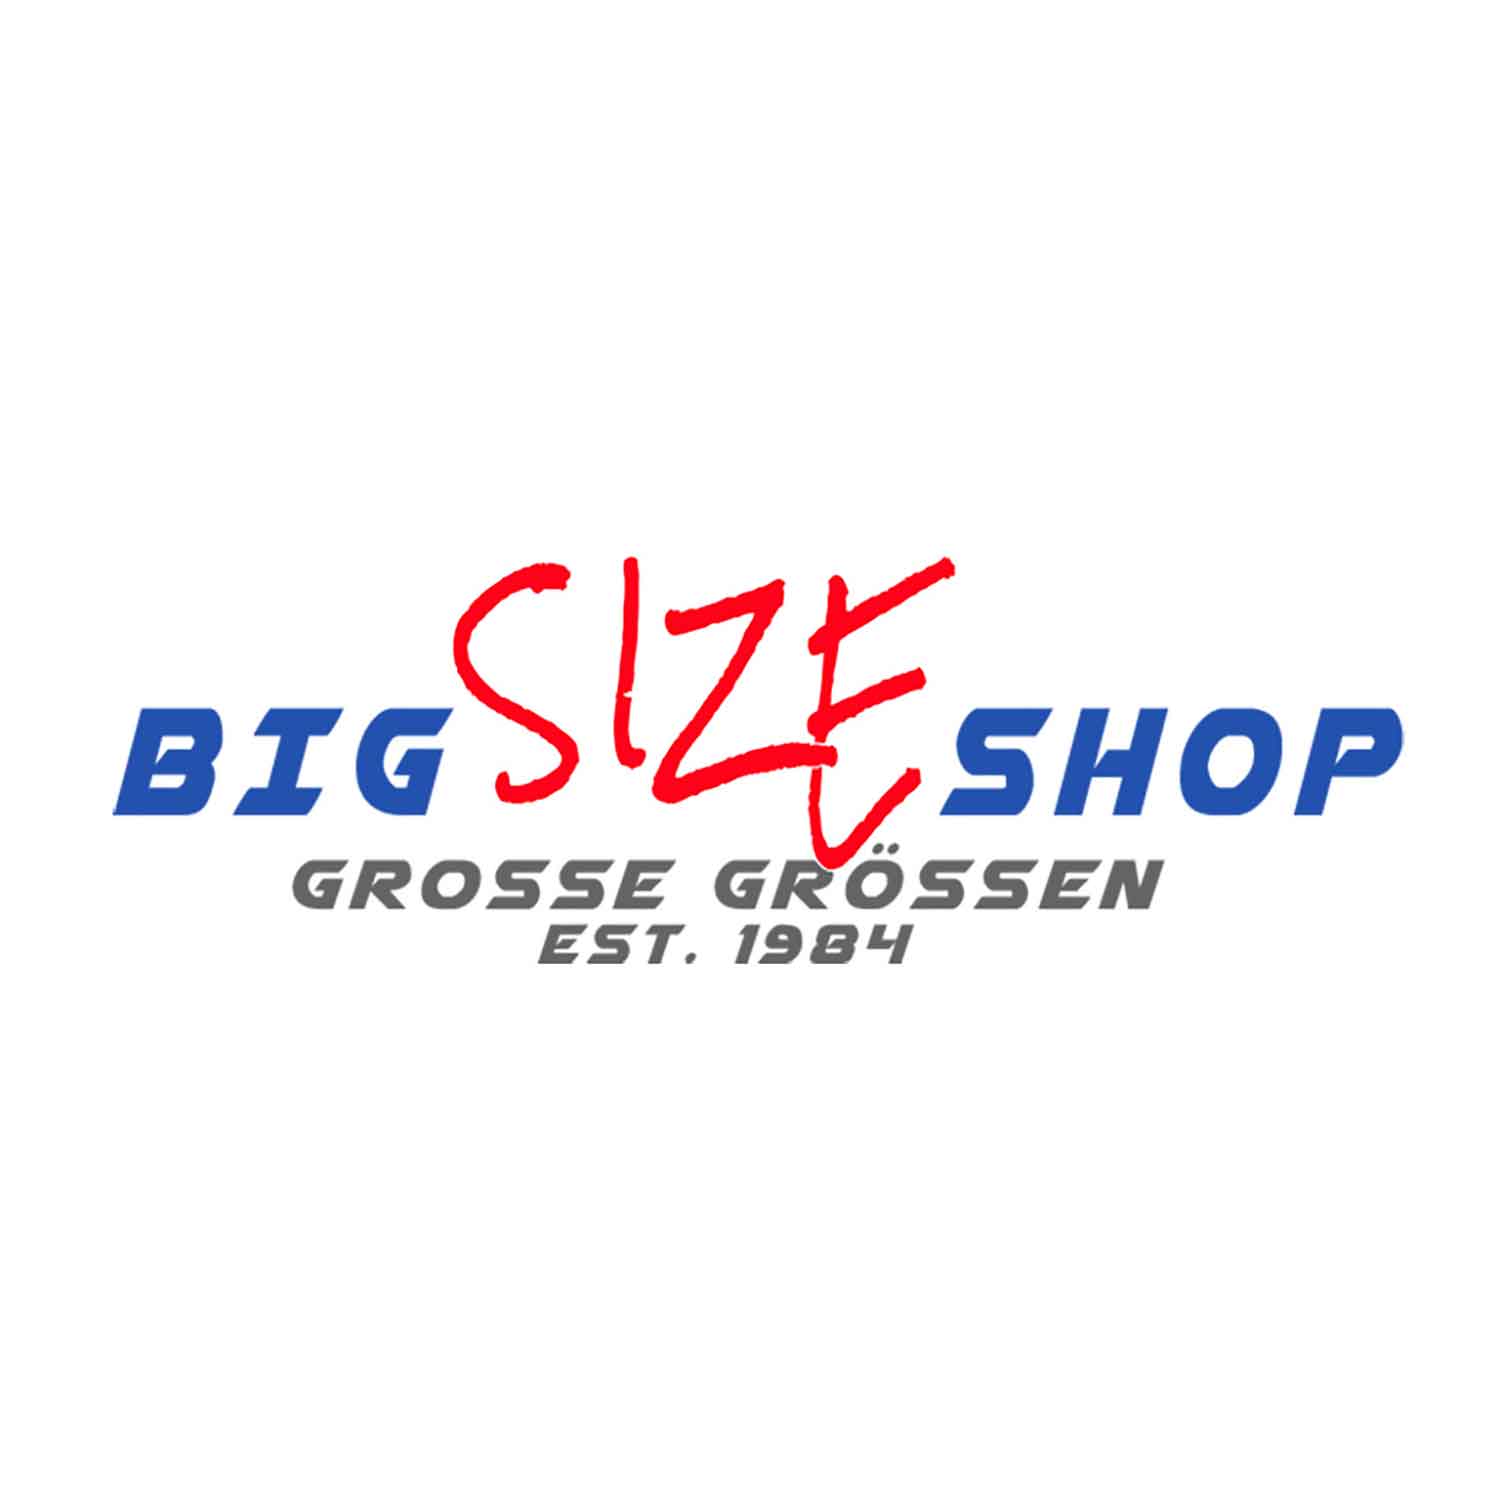 (c) Big-size-shop.de